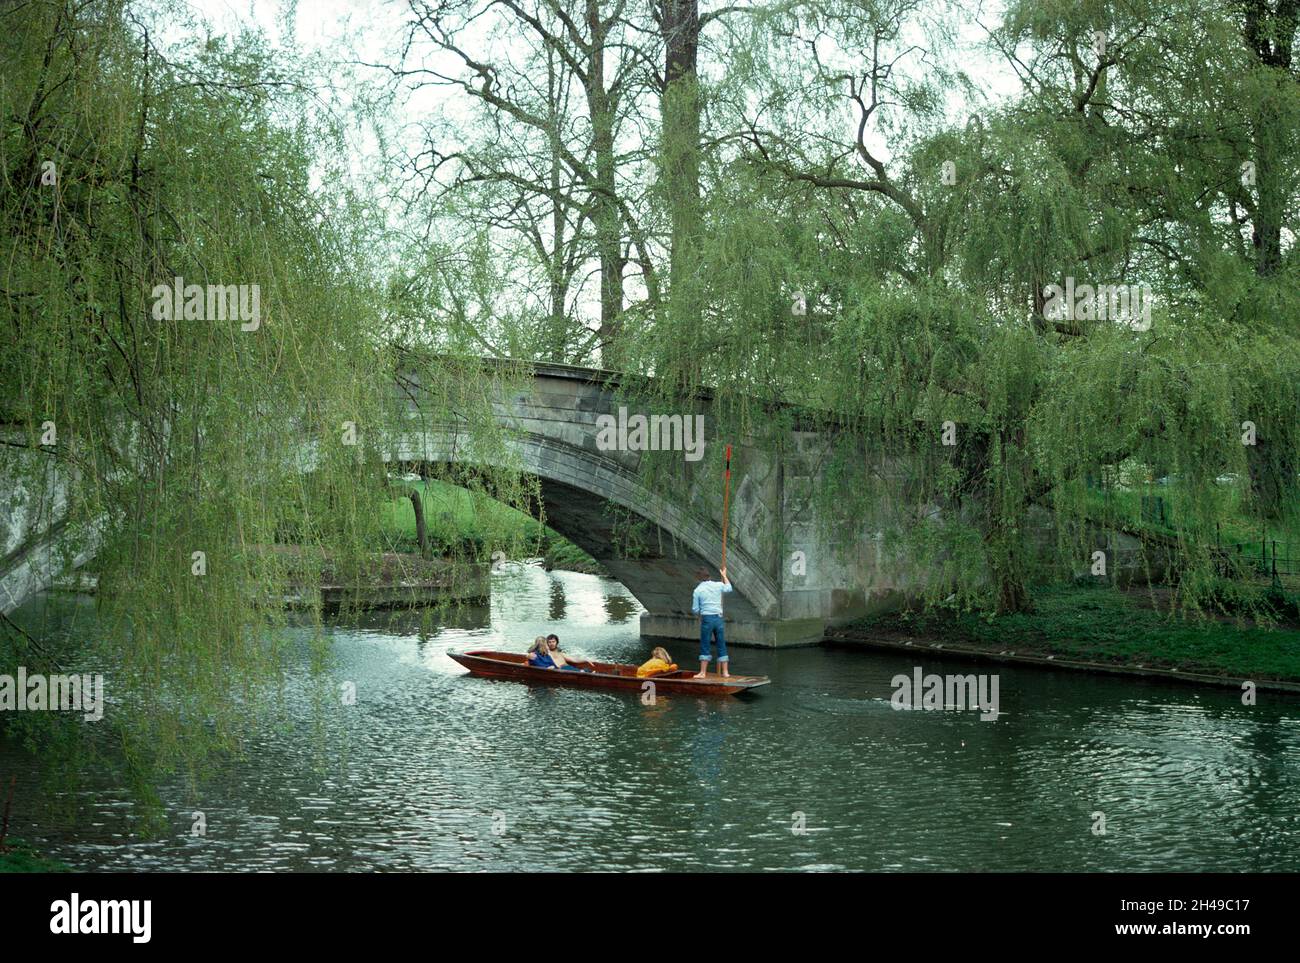 United Kingdom. England. Cambridge. Punting on the river. Stock Photo